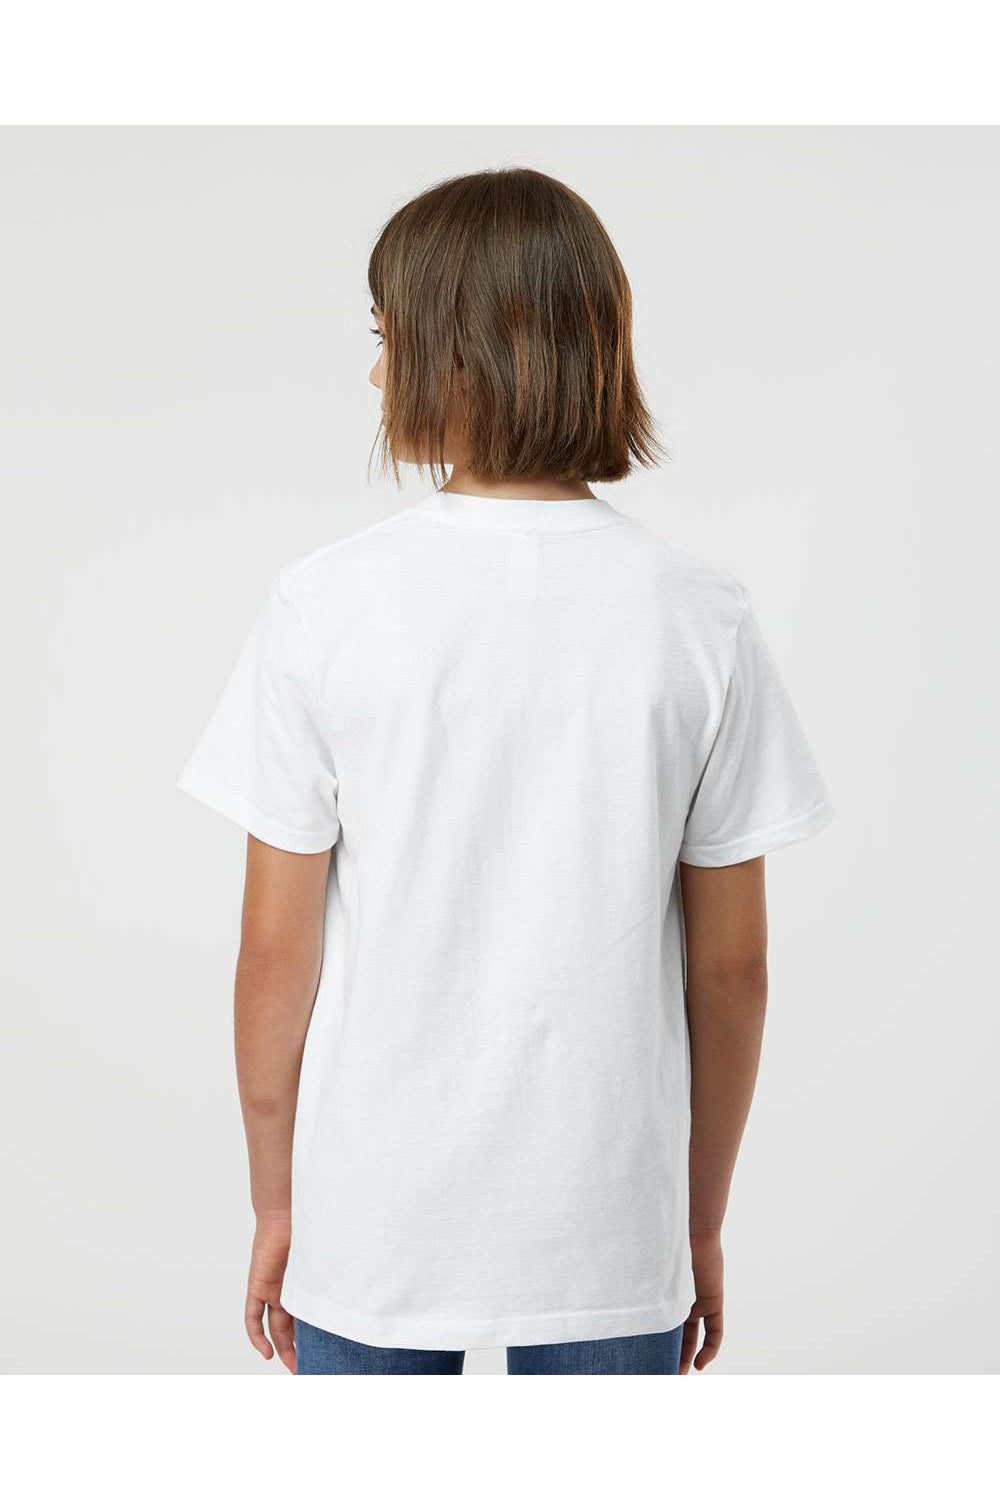 Tultex 295 Youth Jersey Short Sleeve Crewneck T-Shirt White Model Back